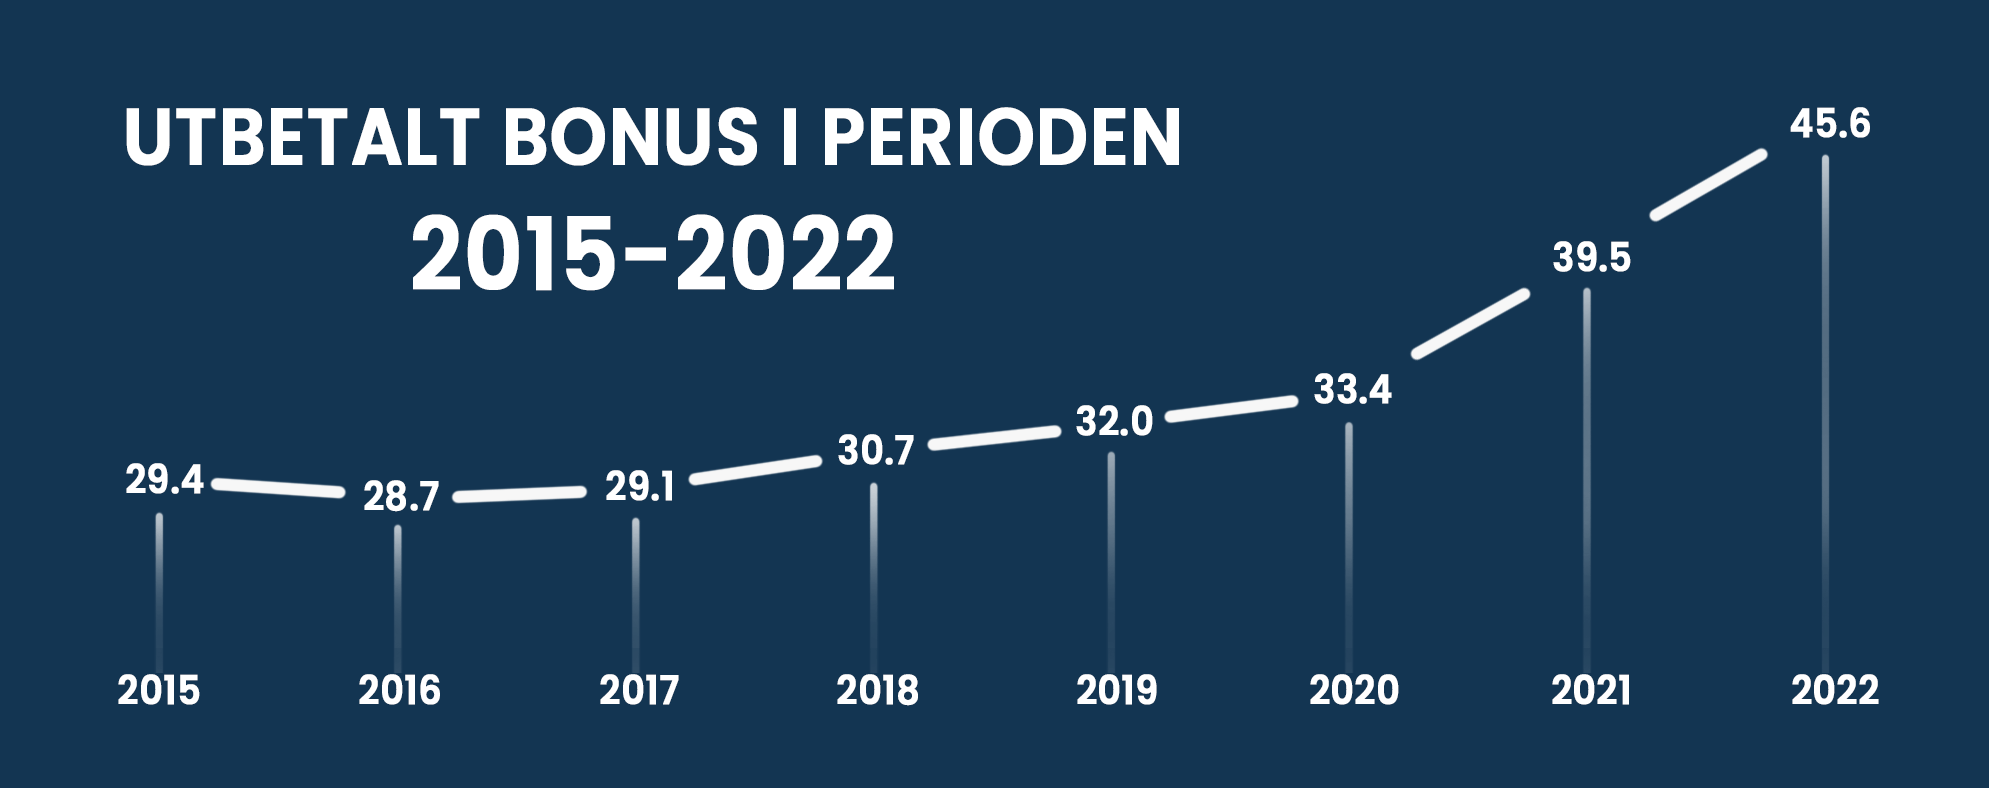 Graf over bonus utbetalt i perioden 2015-2022